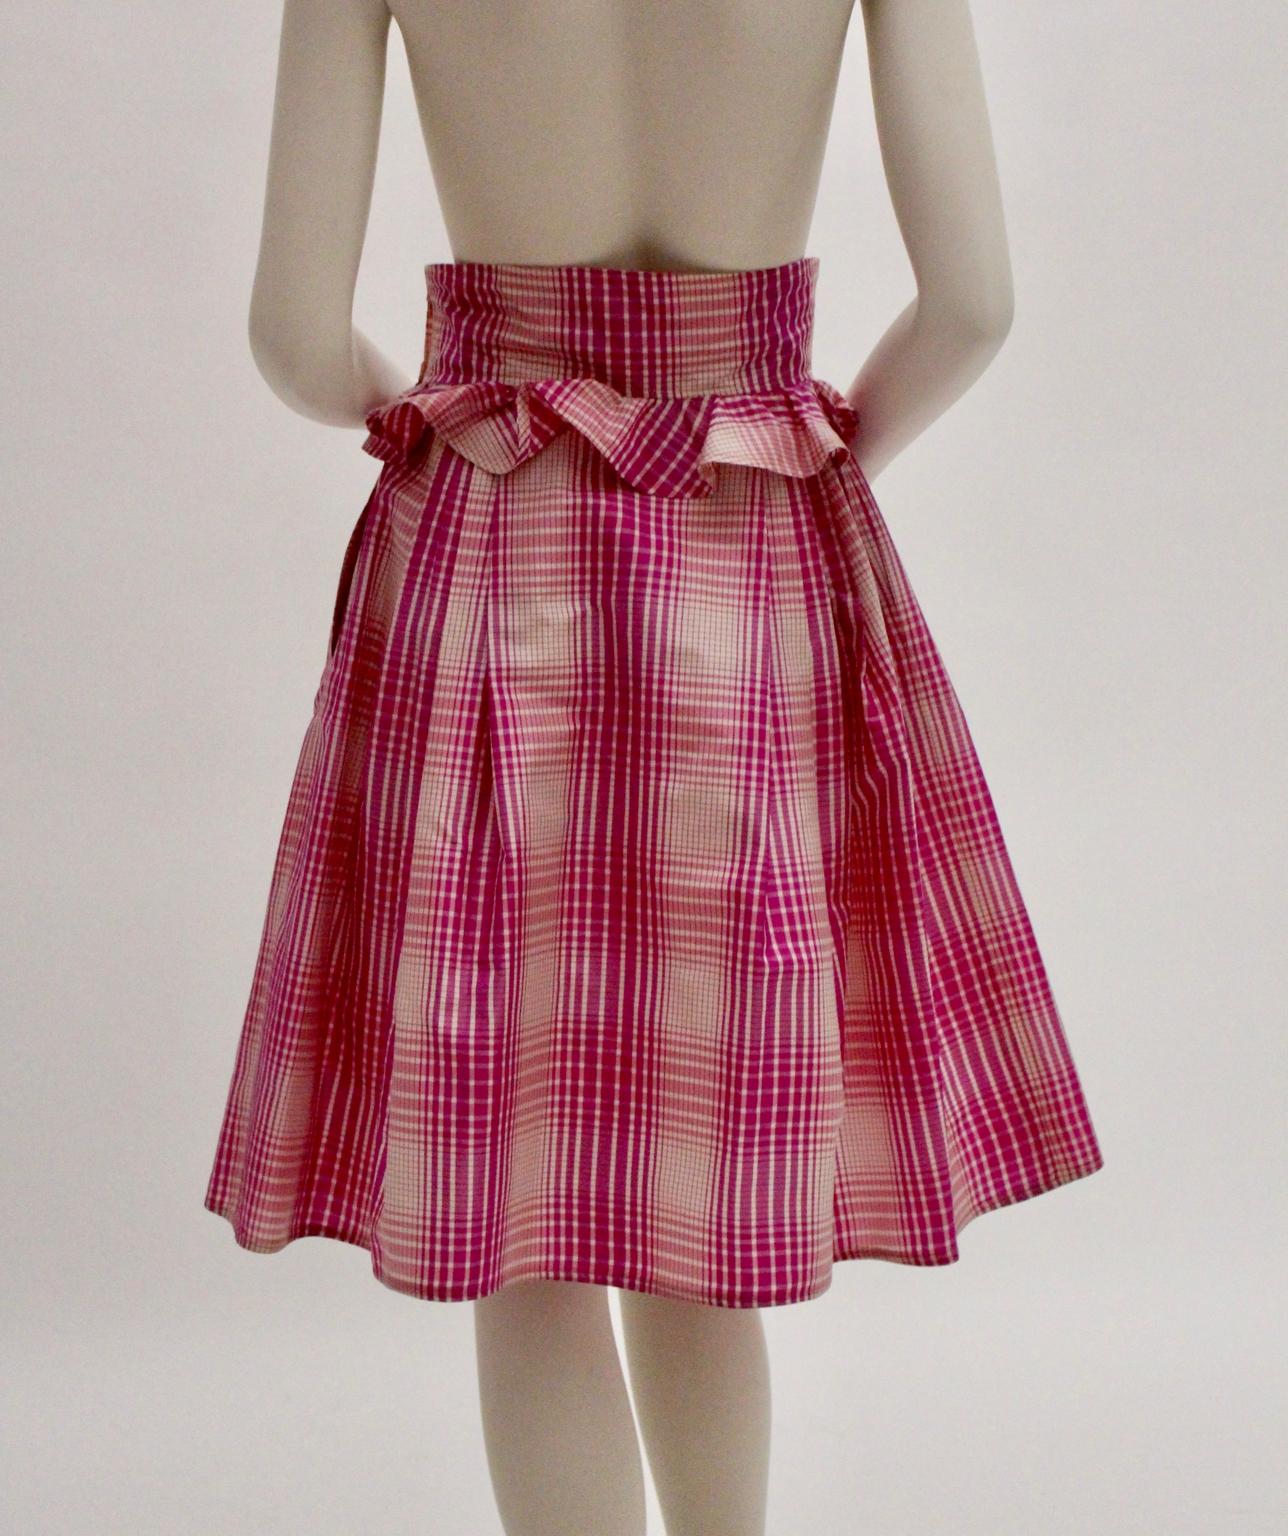 Silk Pink White Checker Vintage High Waist Skirt by Emanuel Ungaro 1980s Paris For Sale 3